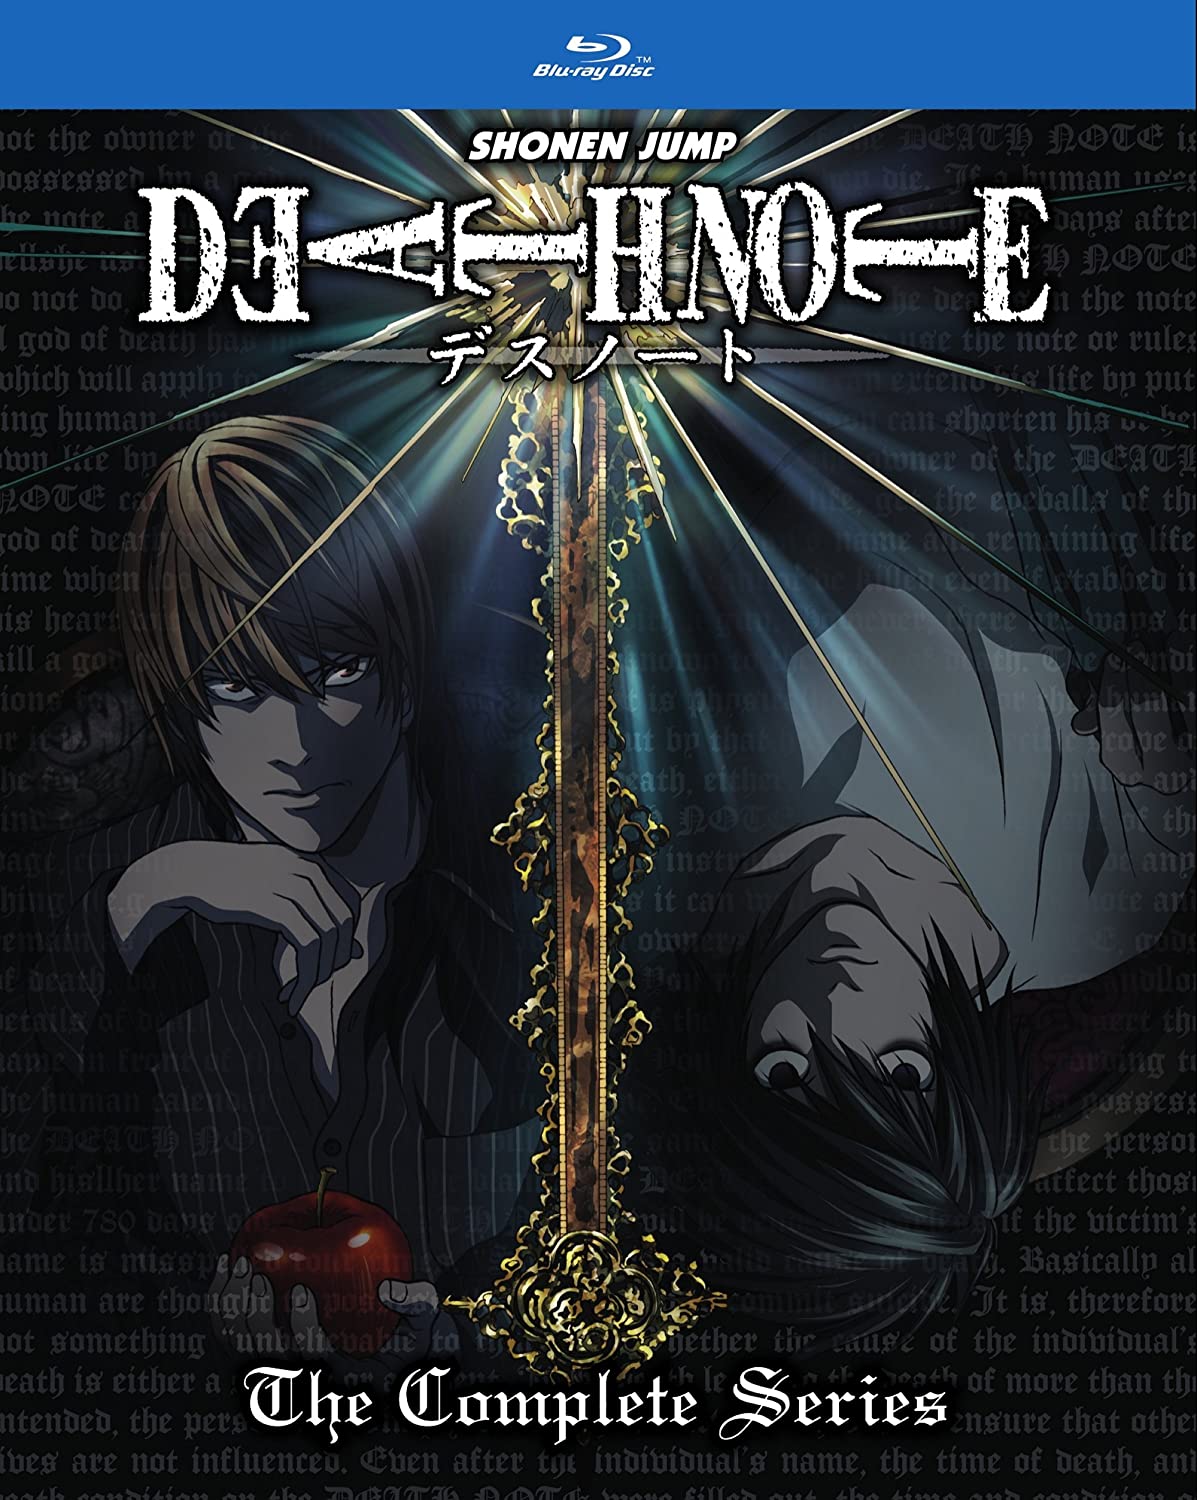 Death note anime dublado 720p